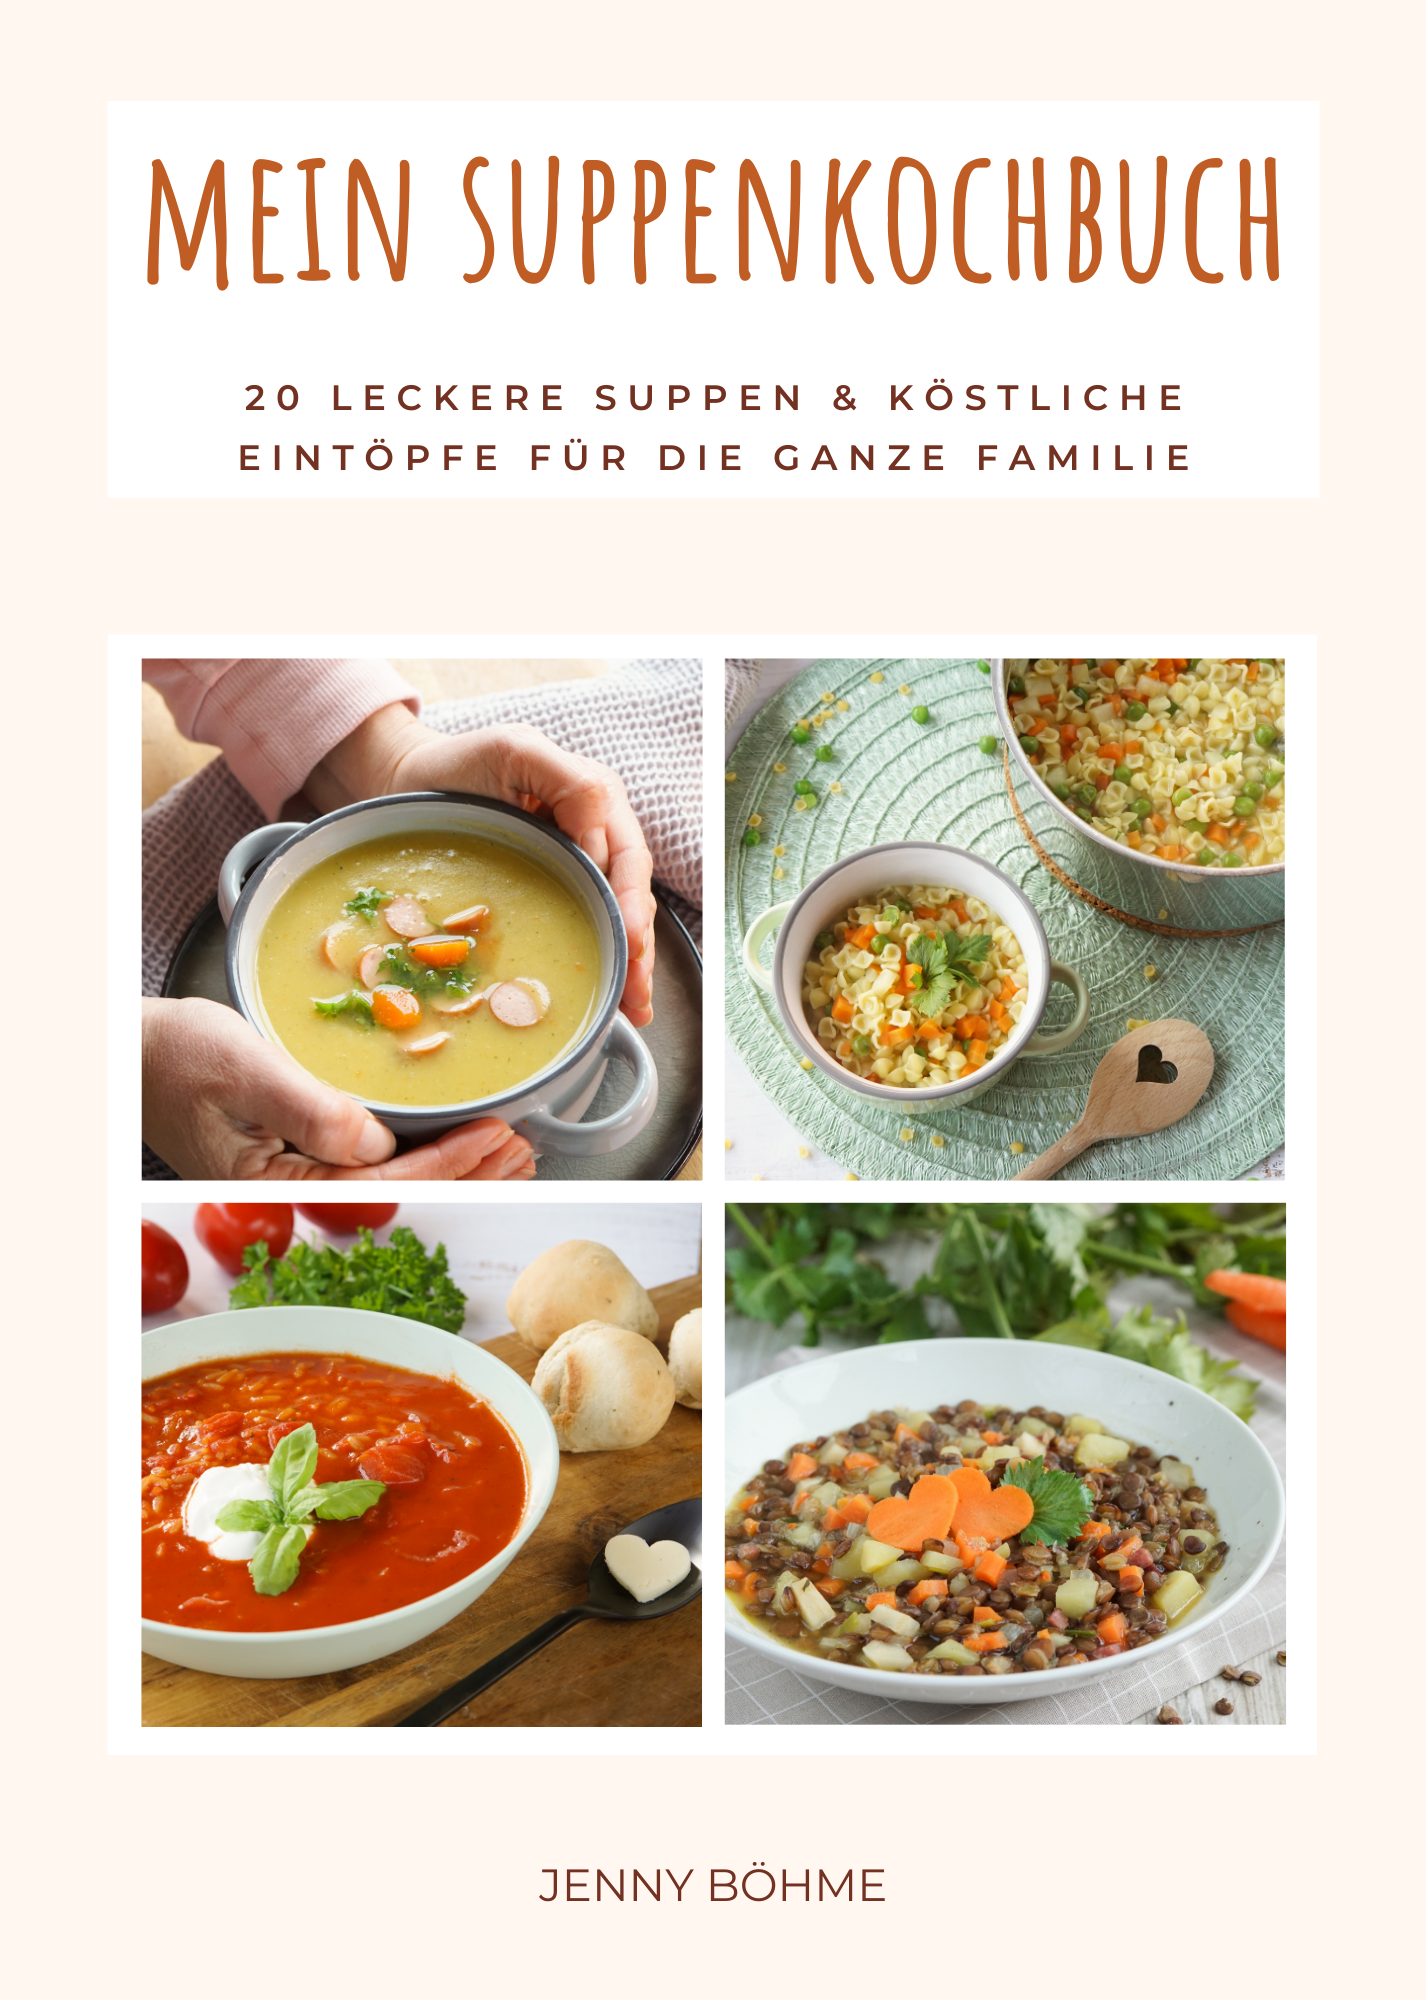 Mein Suppenkochbuch by Jenny Böhme